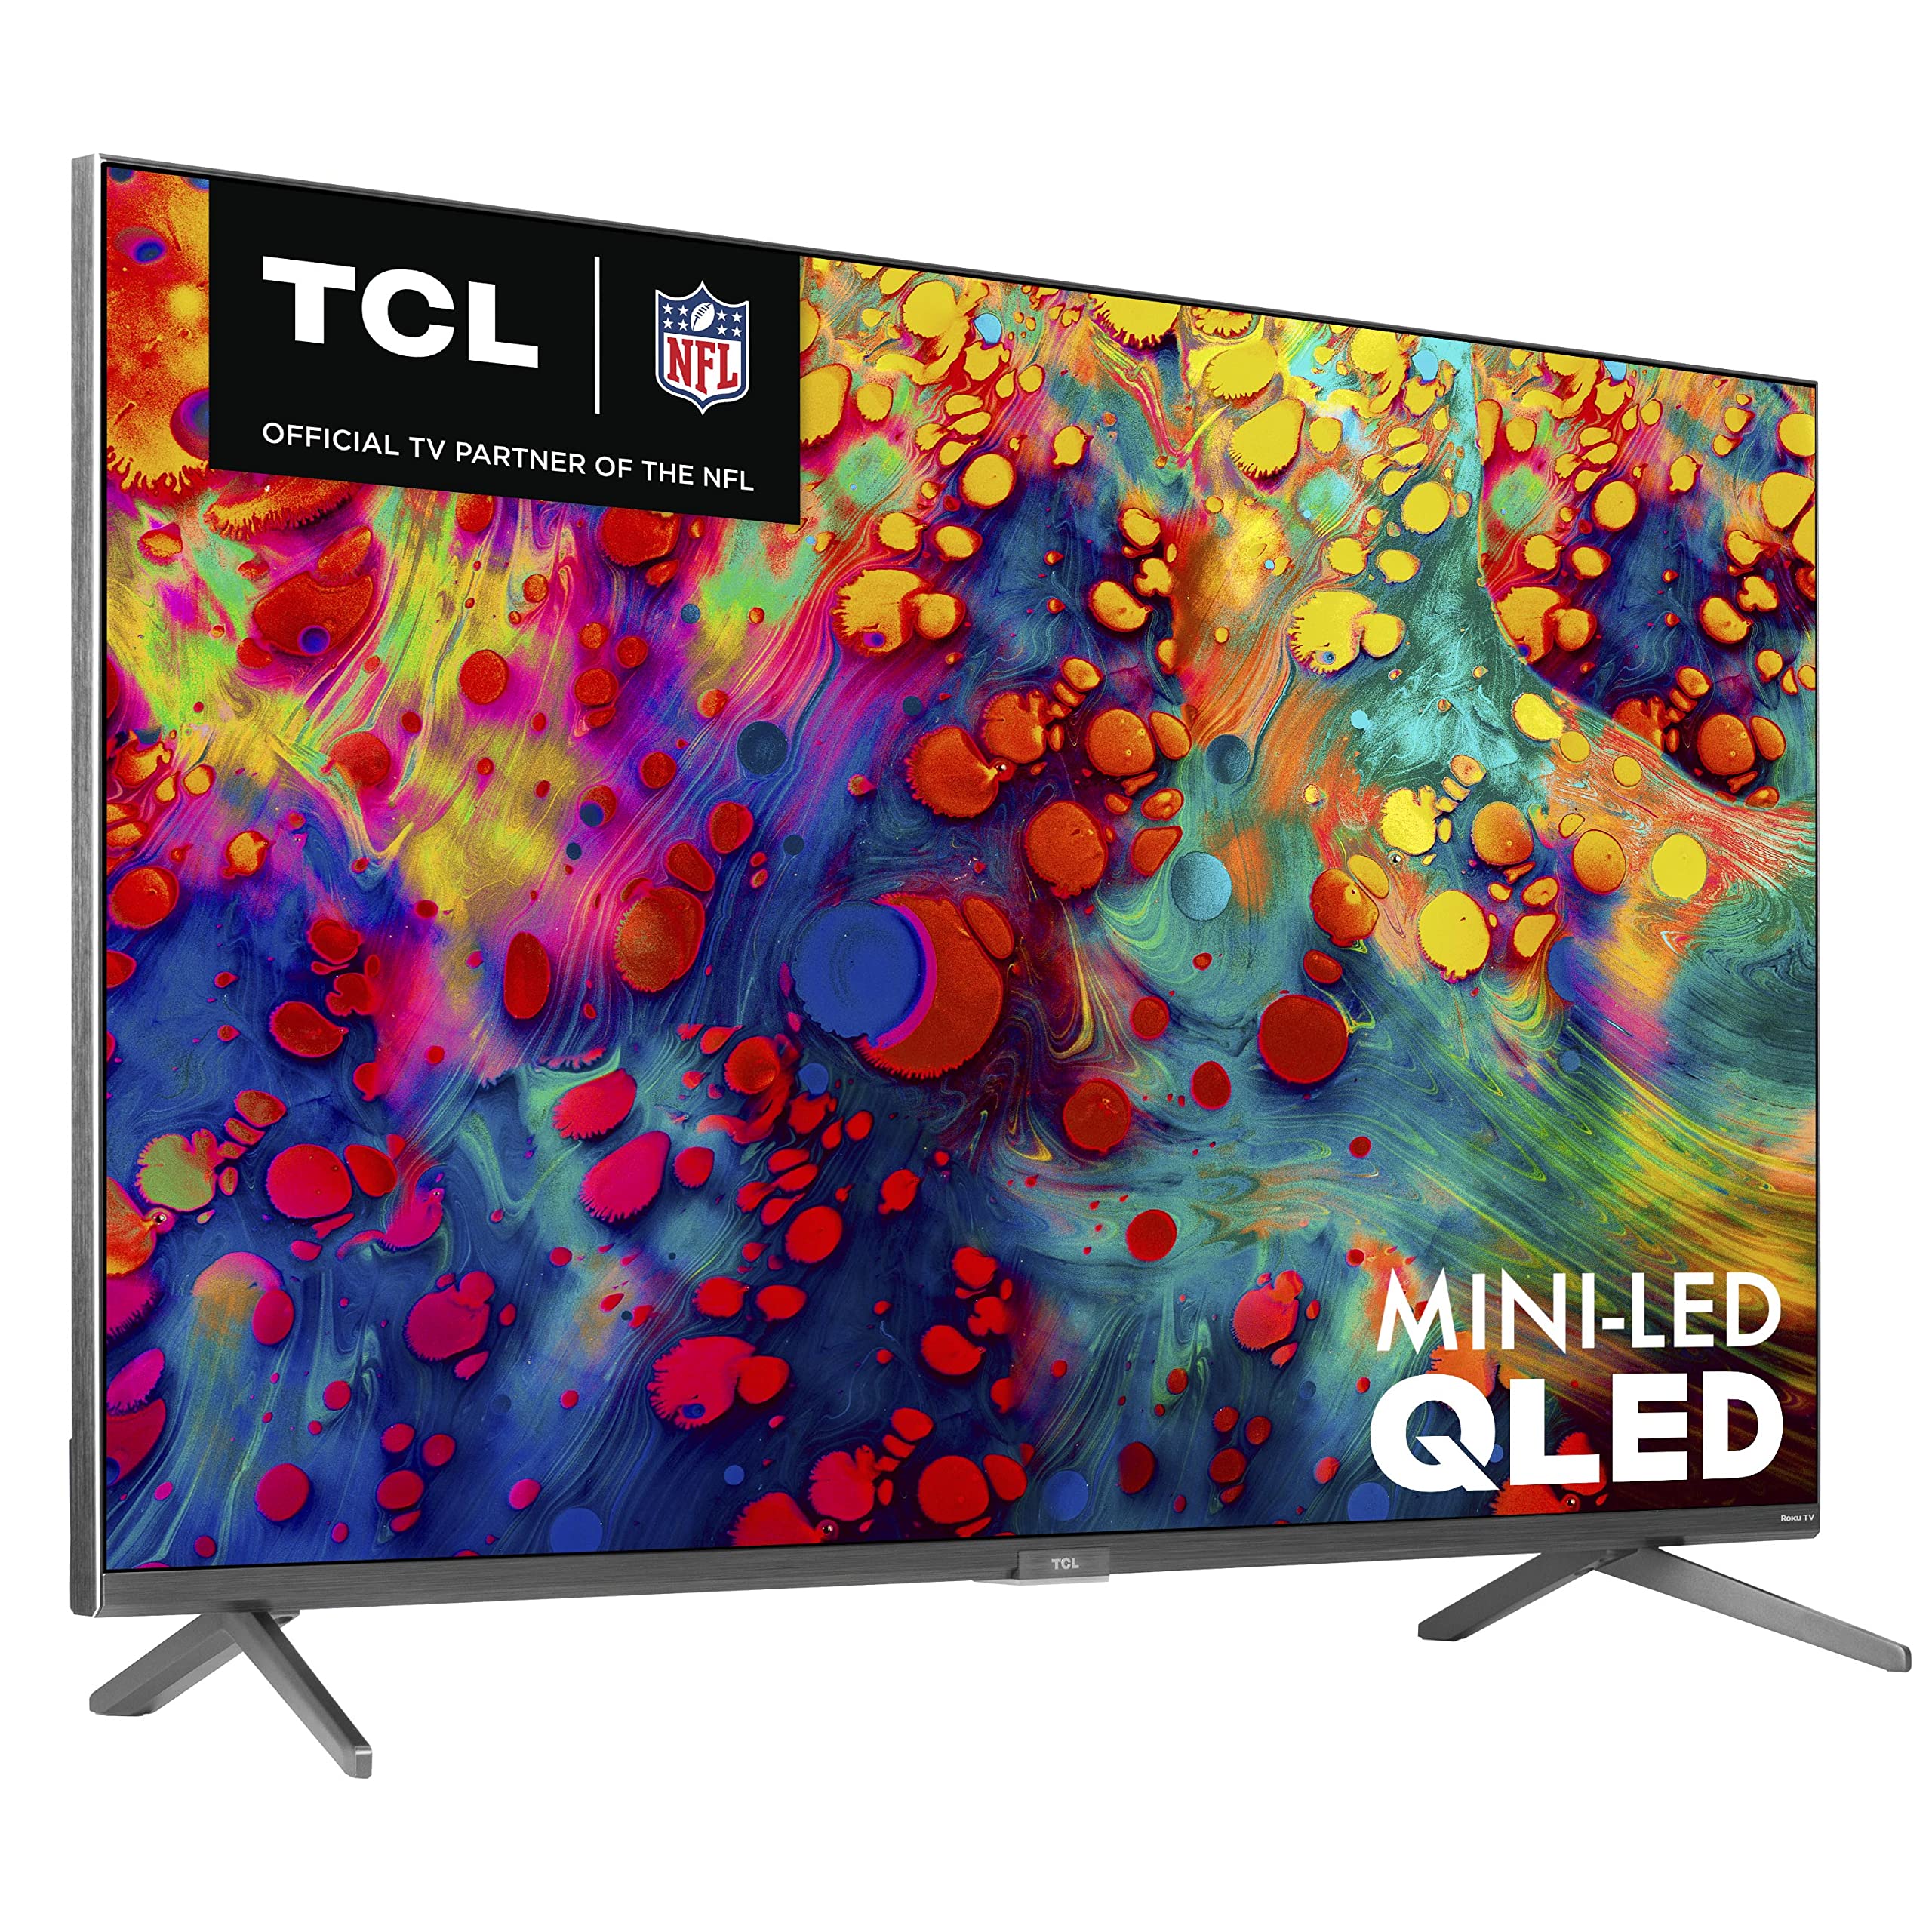 TCL 65-inch 6-Series 4K UHD Dolby Vision HDR QLED Roku Smart TV - 65R635, 2021 Model, Black